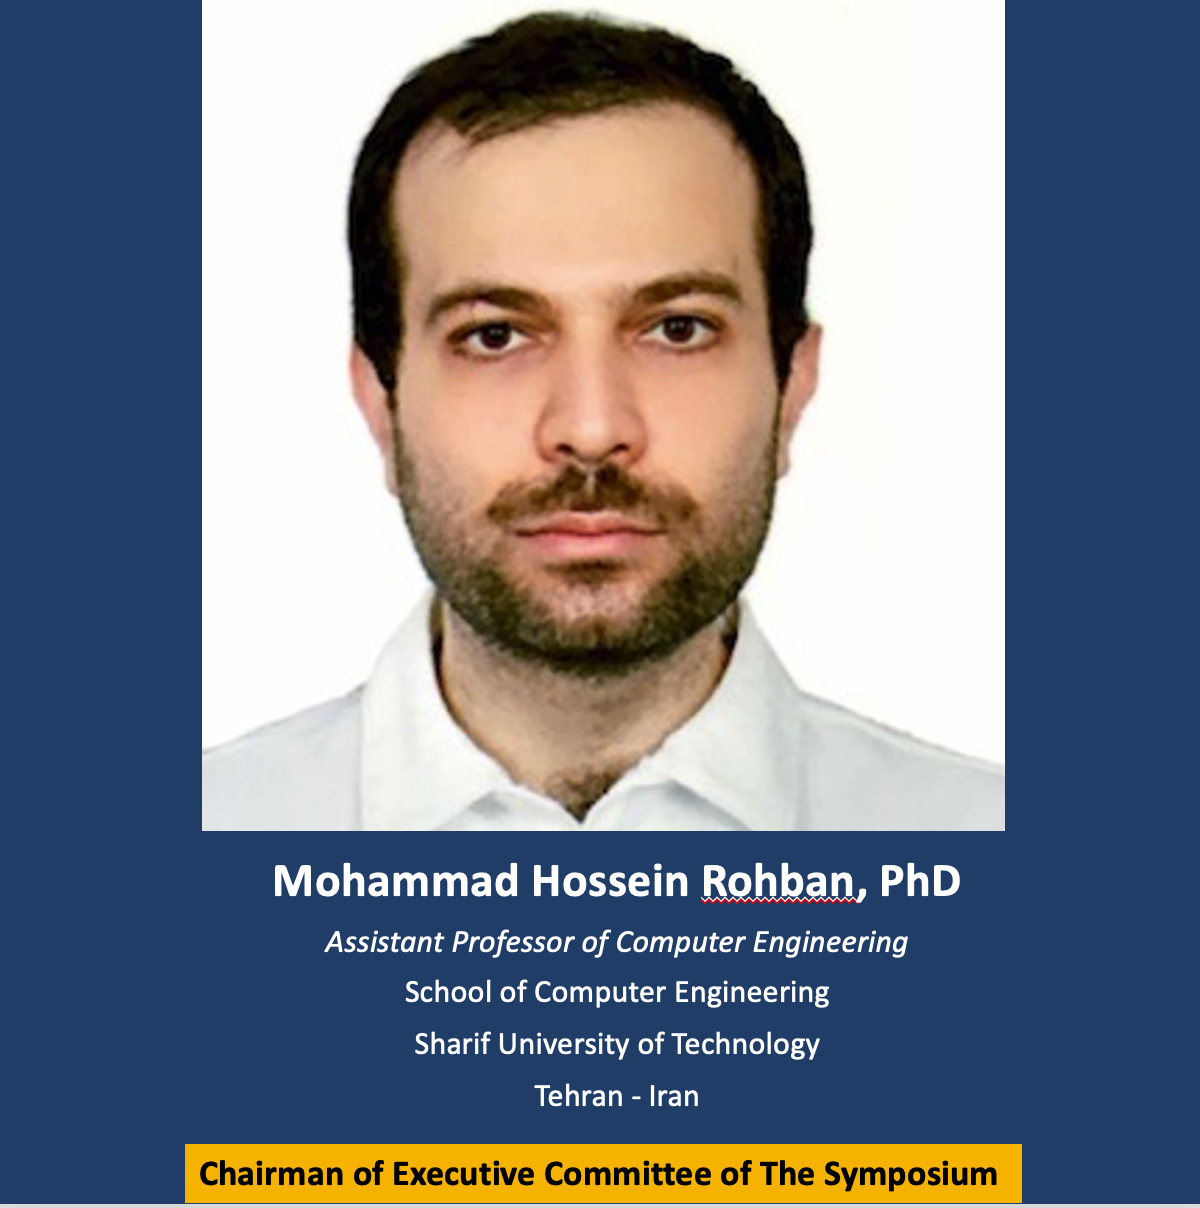 Mohammad Hossein Rohban